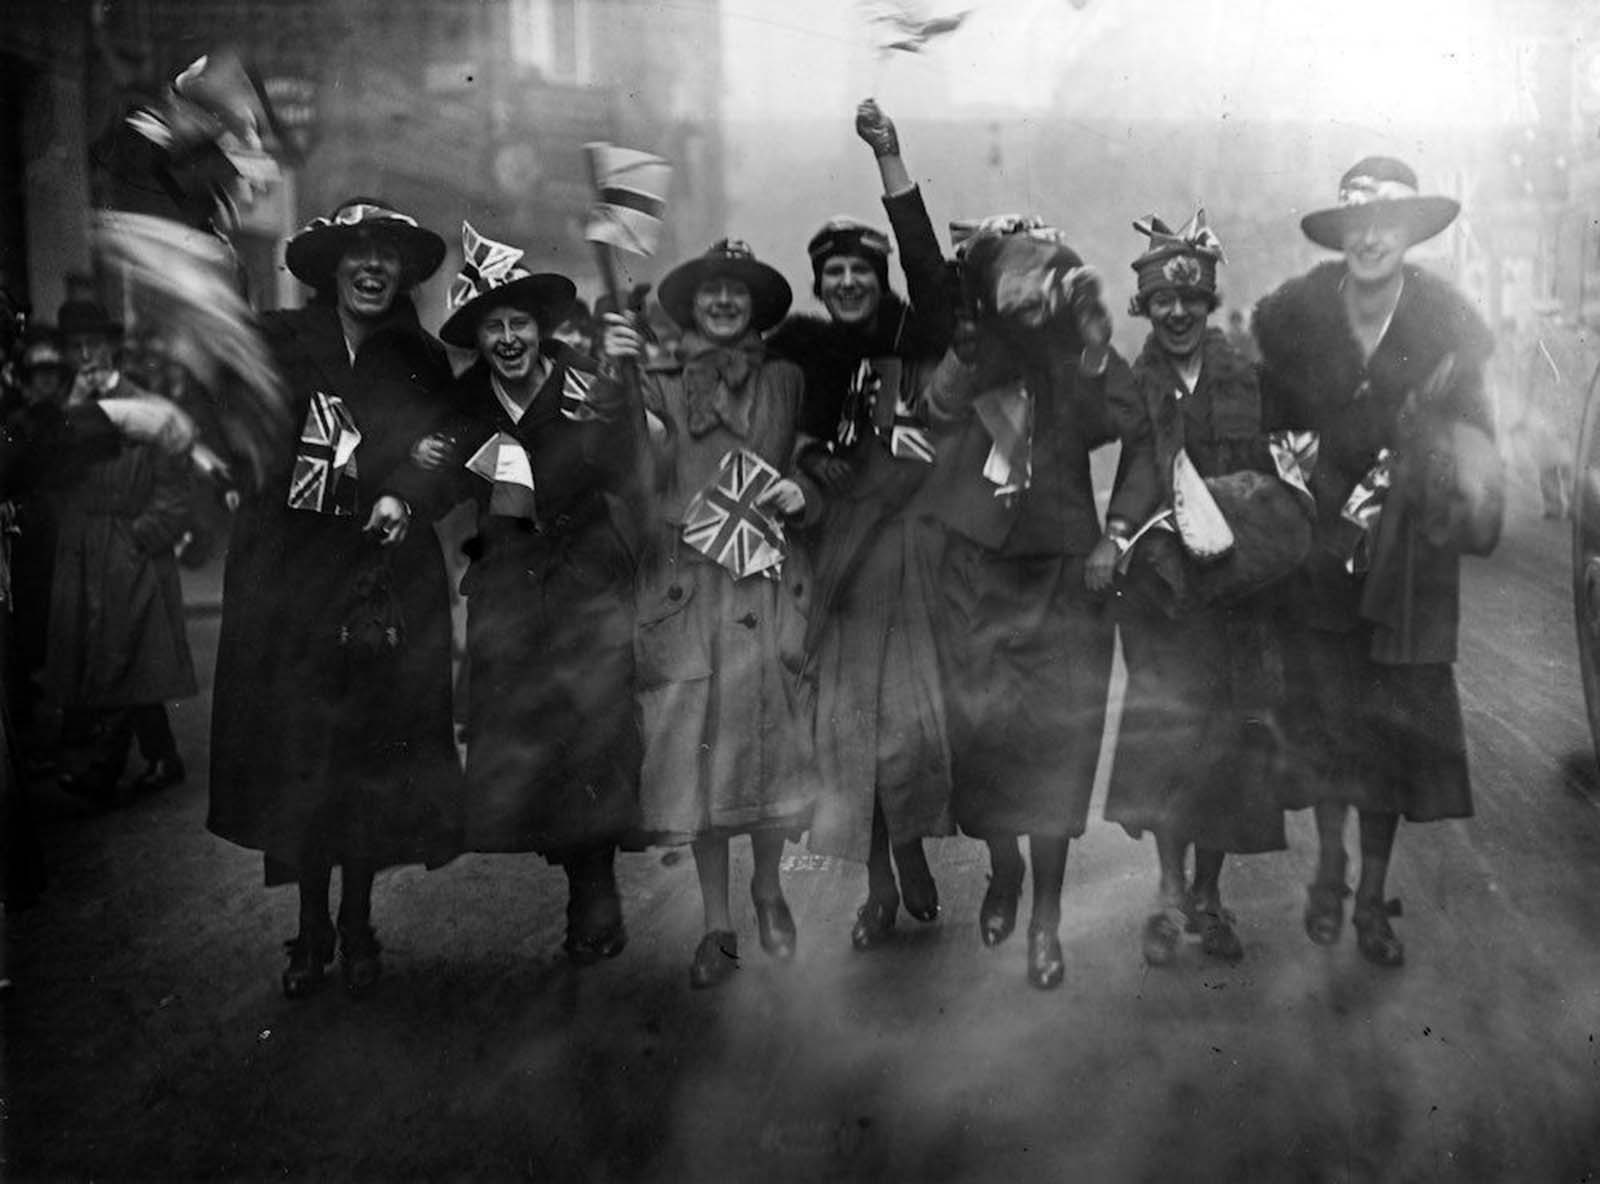 A group of women joyfully waving Union Jacks on Armistice Day.